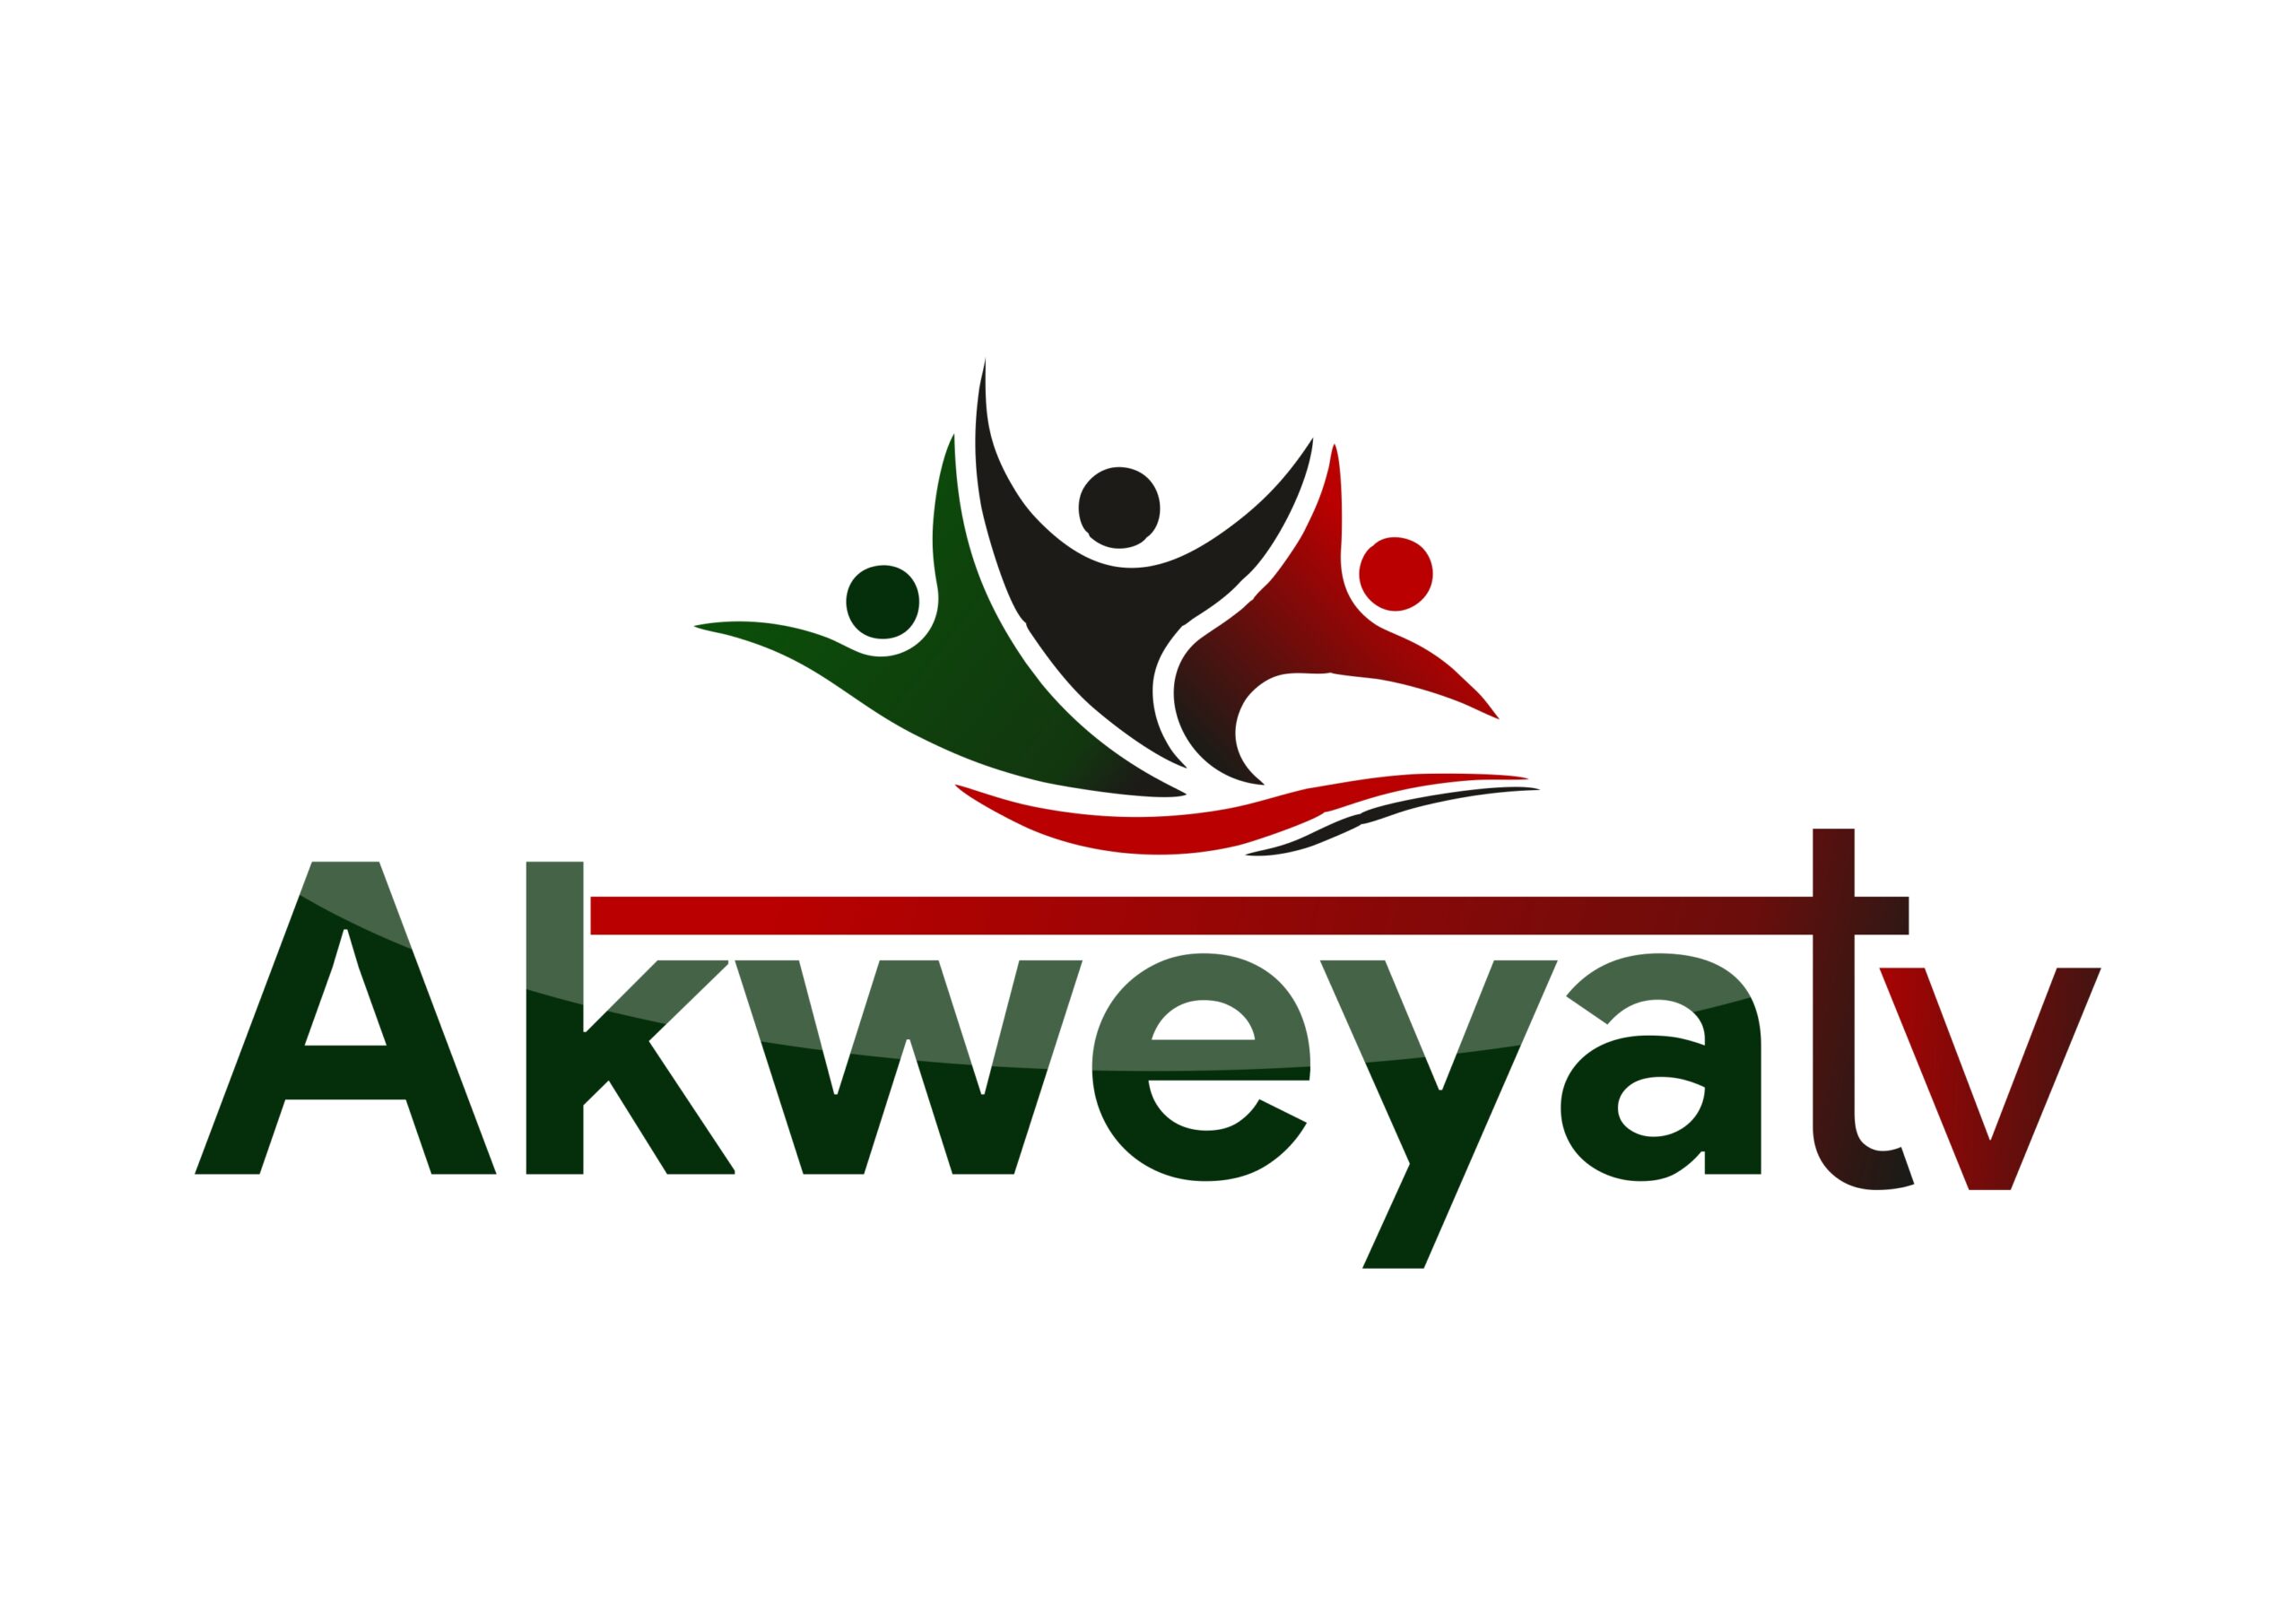 AkweyaTV